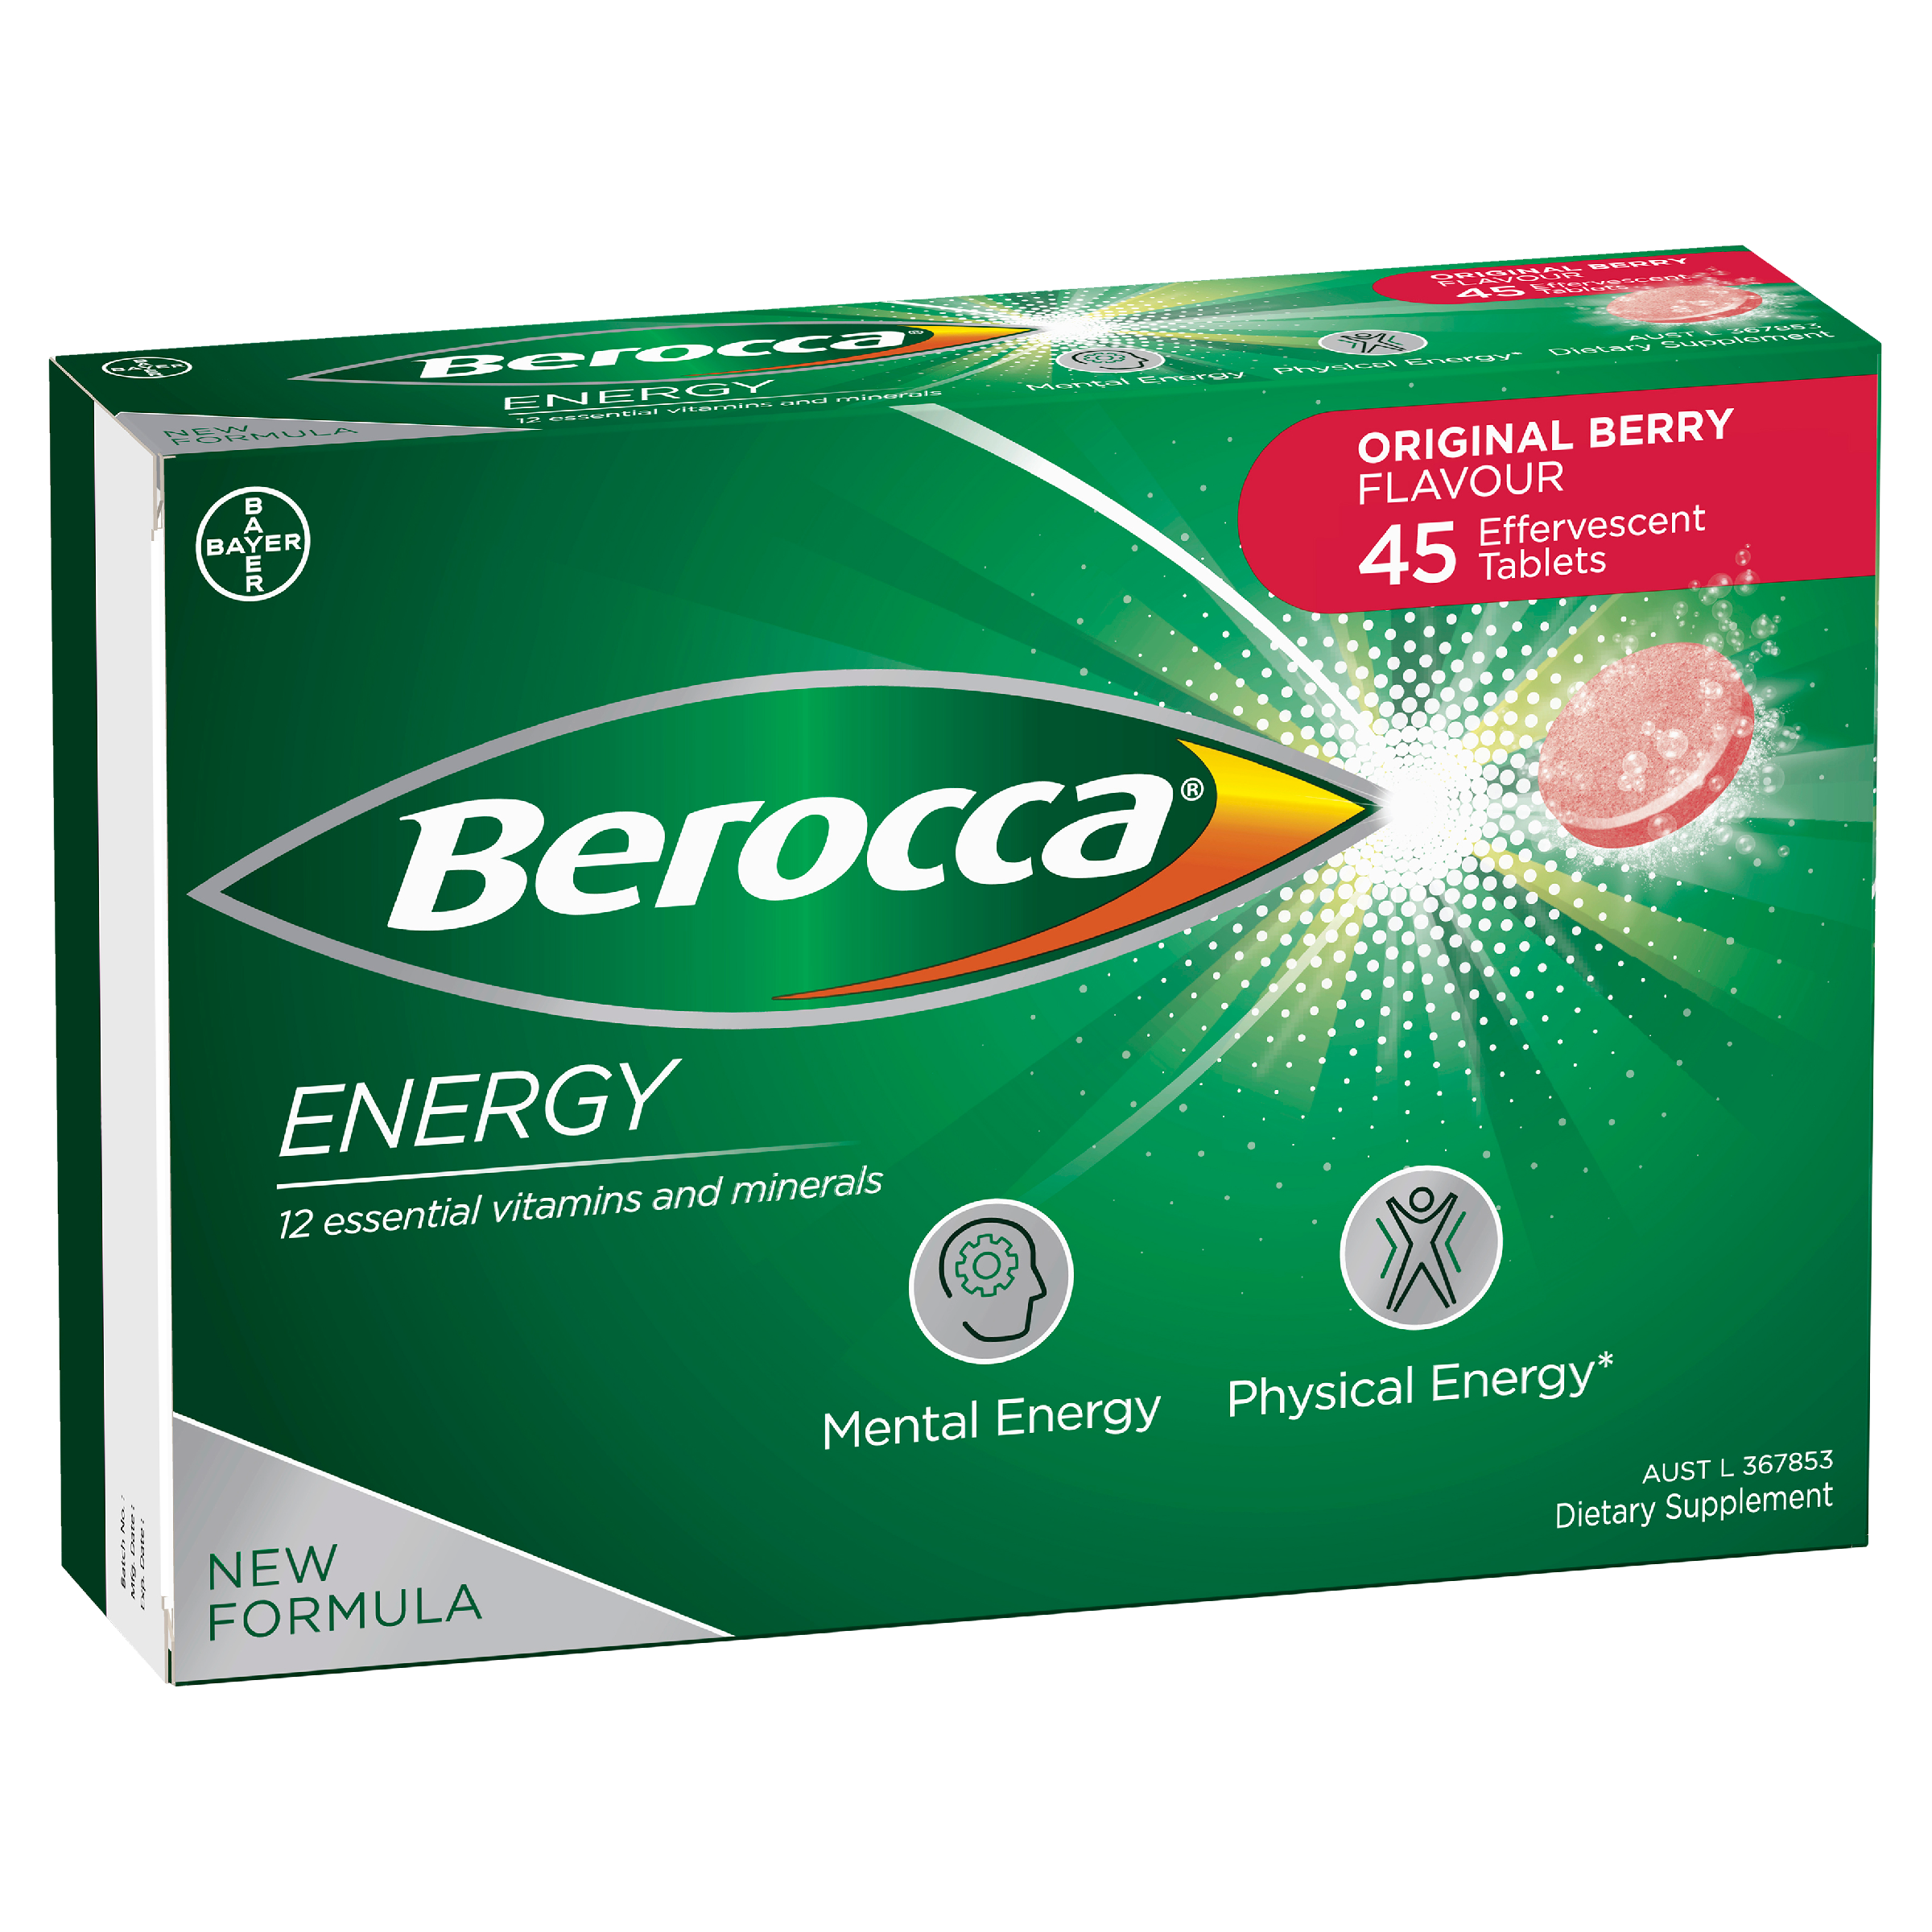 Berocca Energy Original Berry Flavour Effervescent Tablets